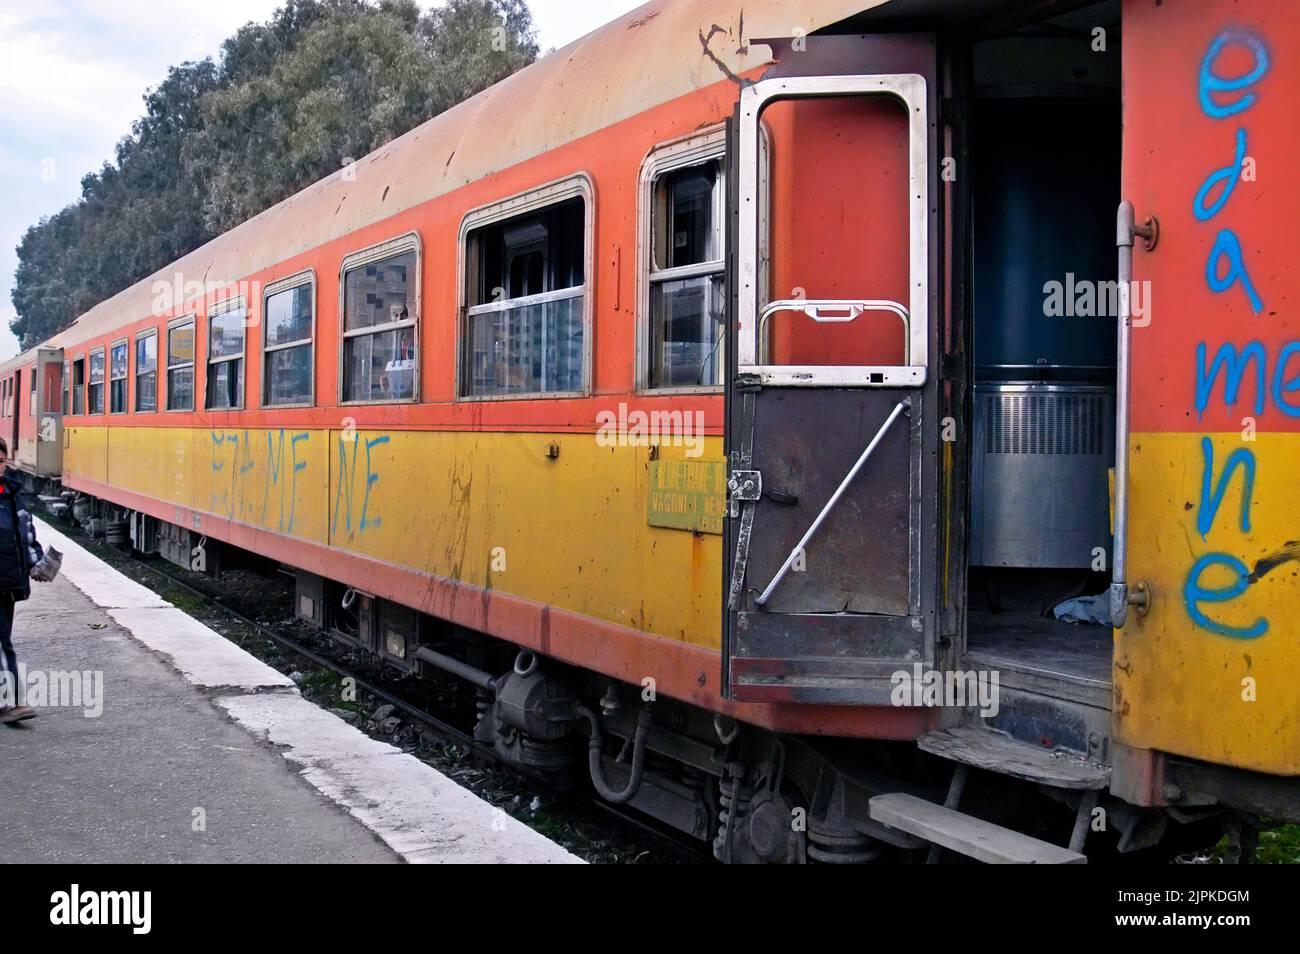 Albanian passenger railway carriage in poor condition, Durres, Albania Stock Photo